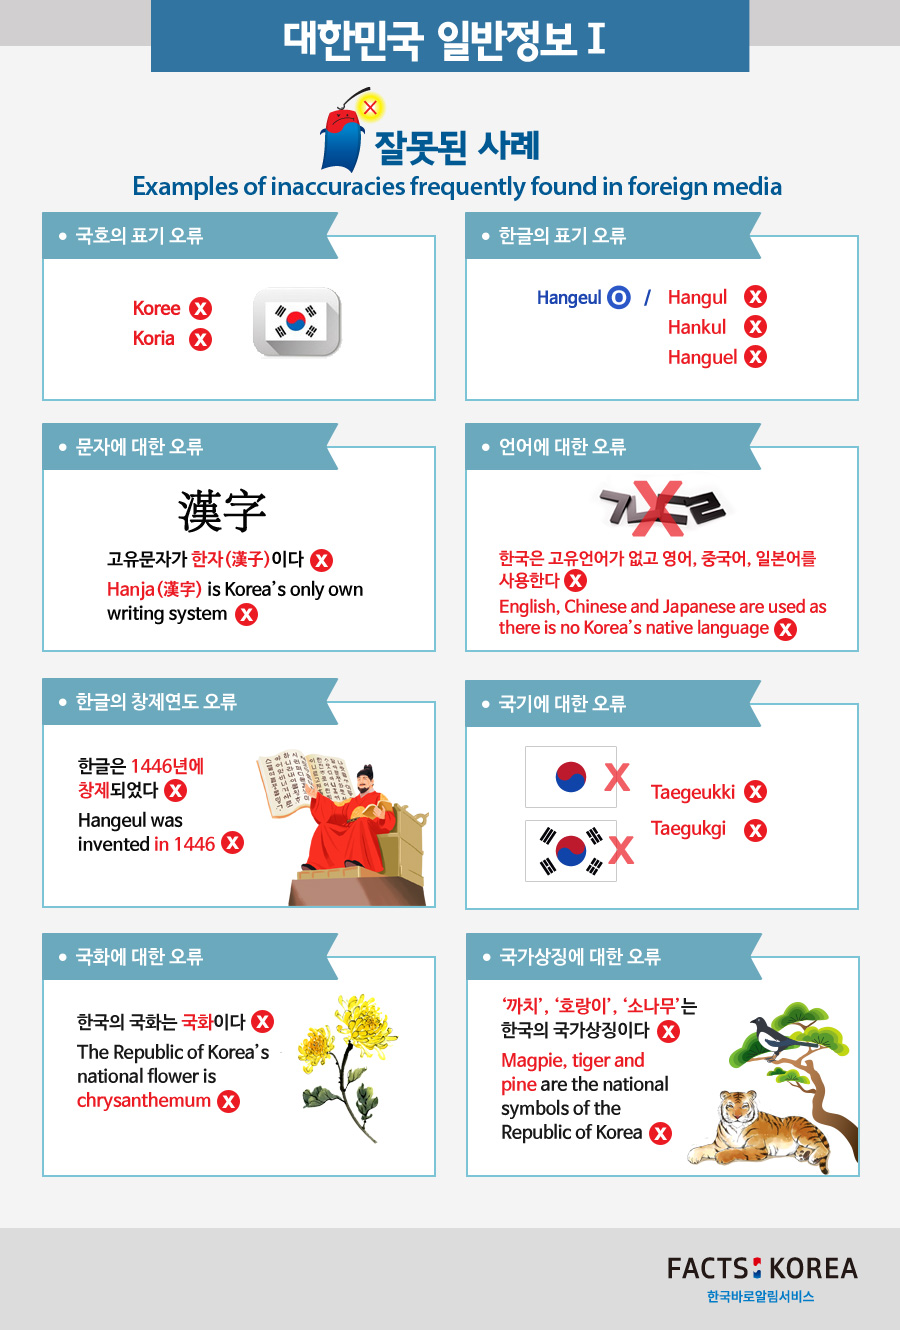 National information the Republic of Korea